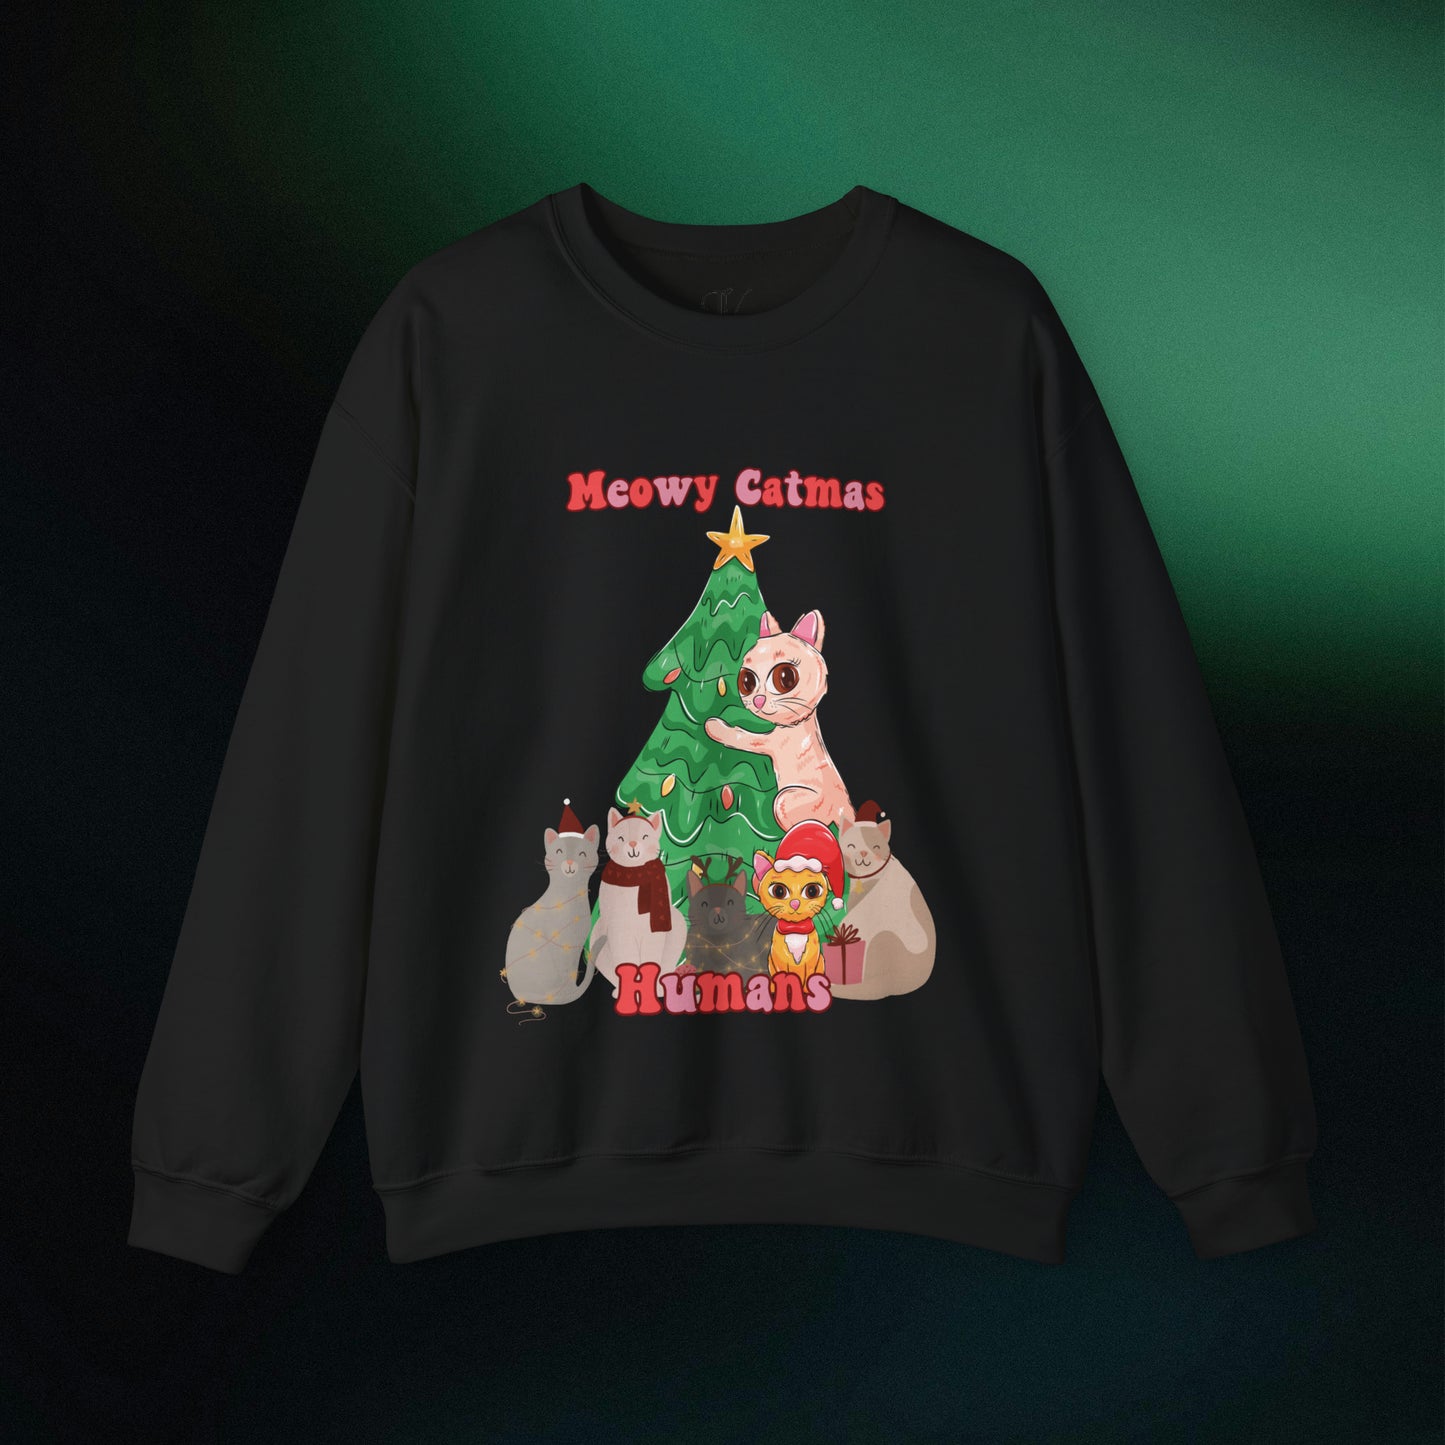 Feline Festivities: Cute Christmas Cat Sweatshirt, Meowy Christmas Cat Sweater, Christmas Gifts for Cat Lovers | Christmas Lights Shirt, Christmas Cats Shirt Sweatshirt   